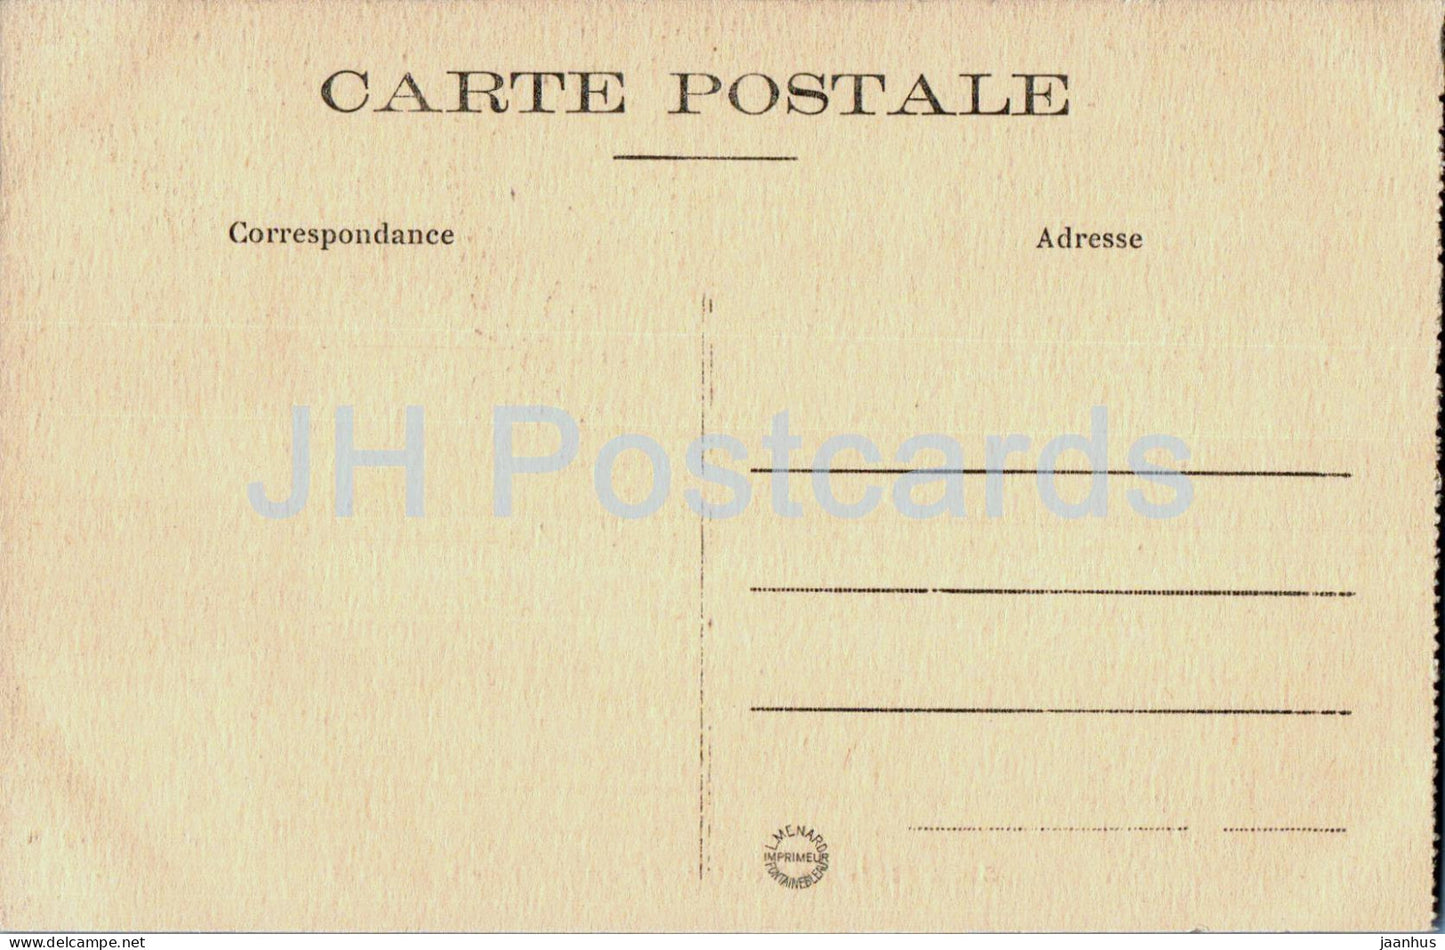 Palais de Fontainebleau - Galerie Henri II - 53 - alte Postkarte - Frankreich - unbenutzt